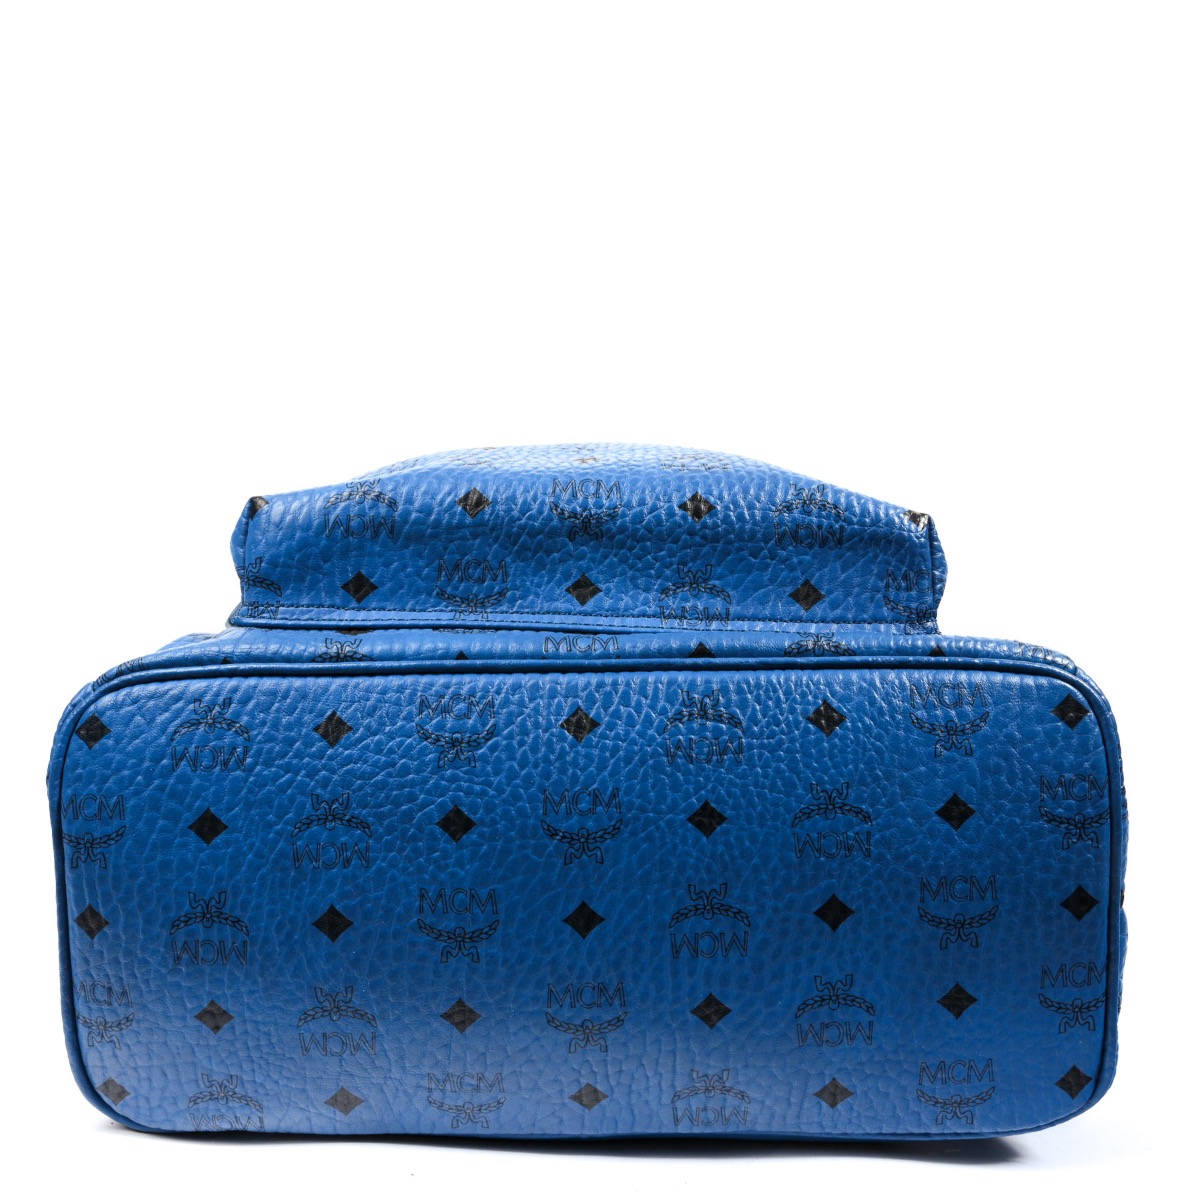 M Sea M MCM Logo Leather Backpack Daypack Blue P14339 – NUIR VINTAGE